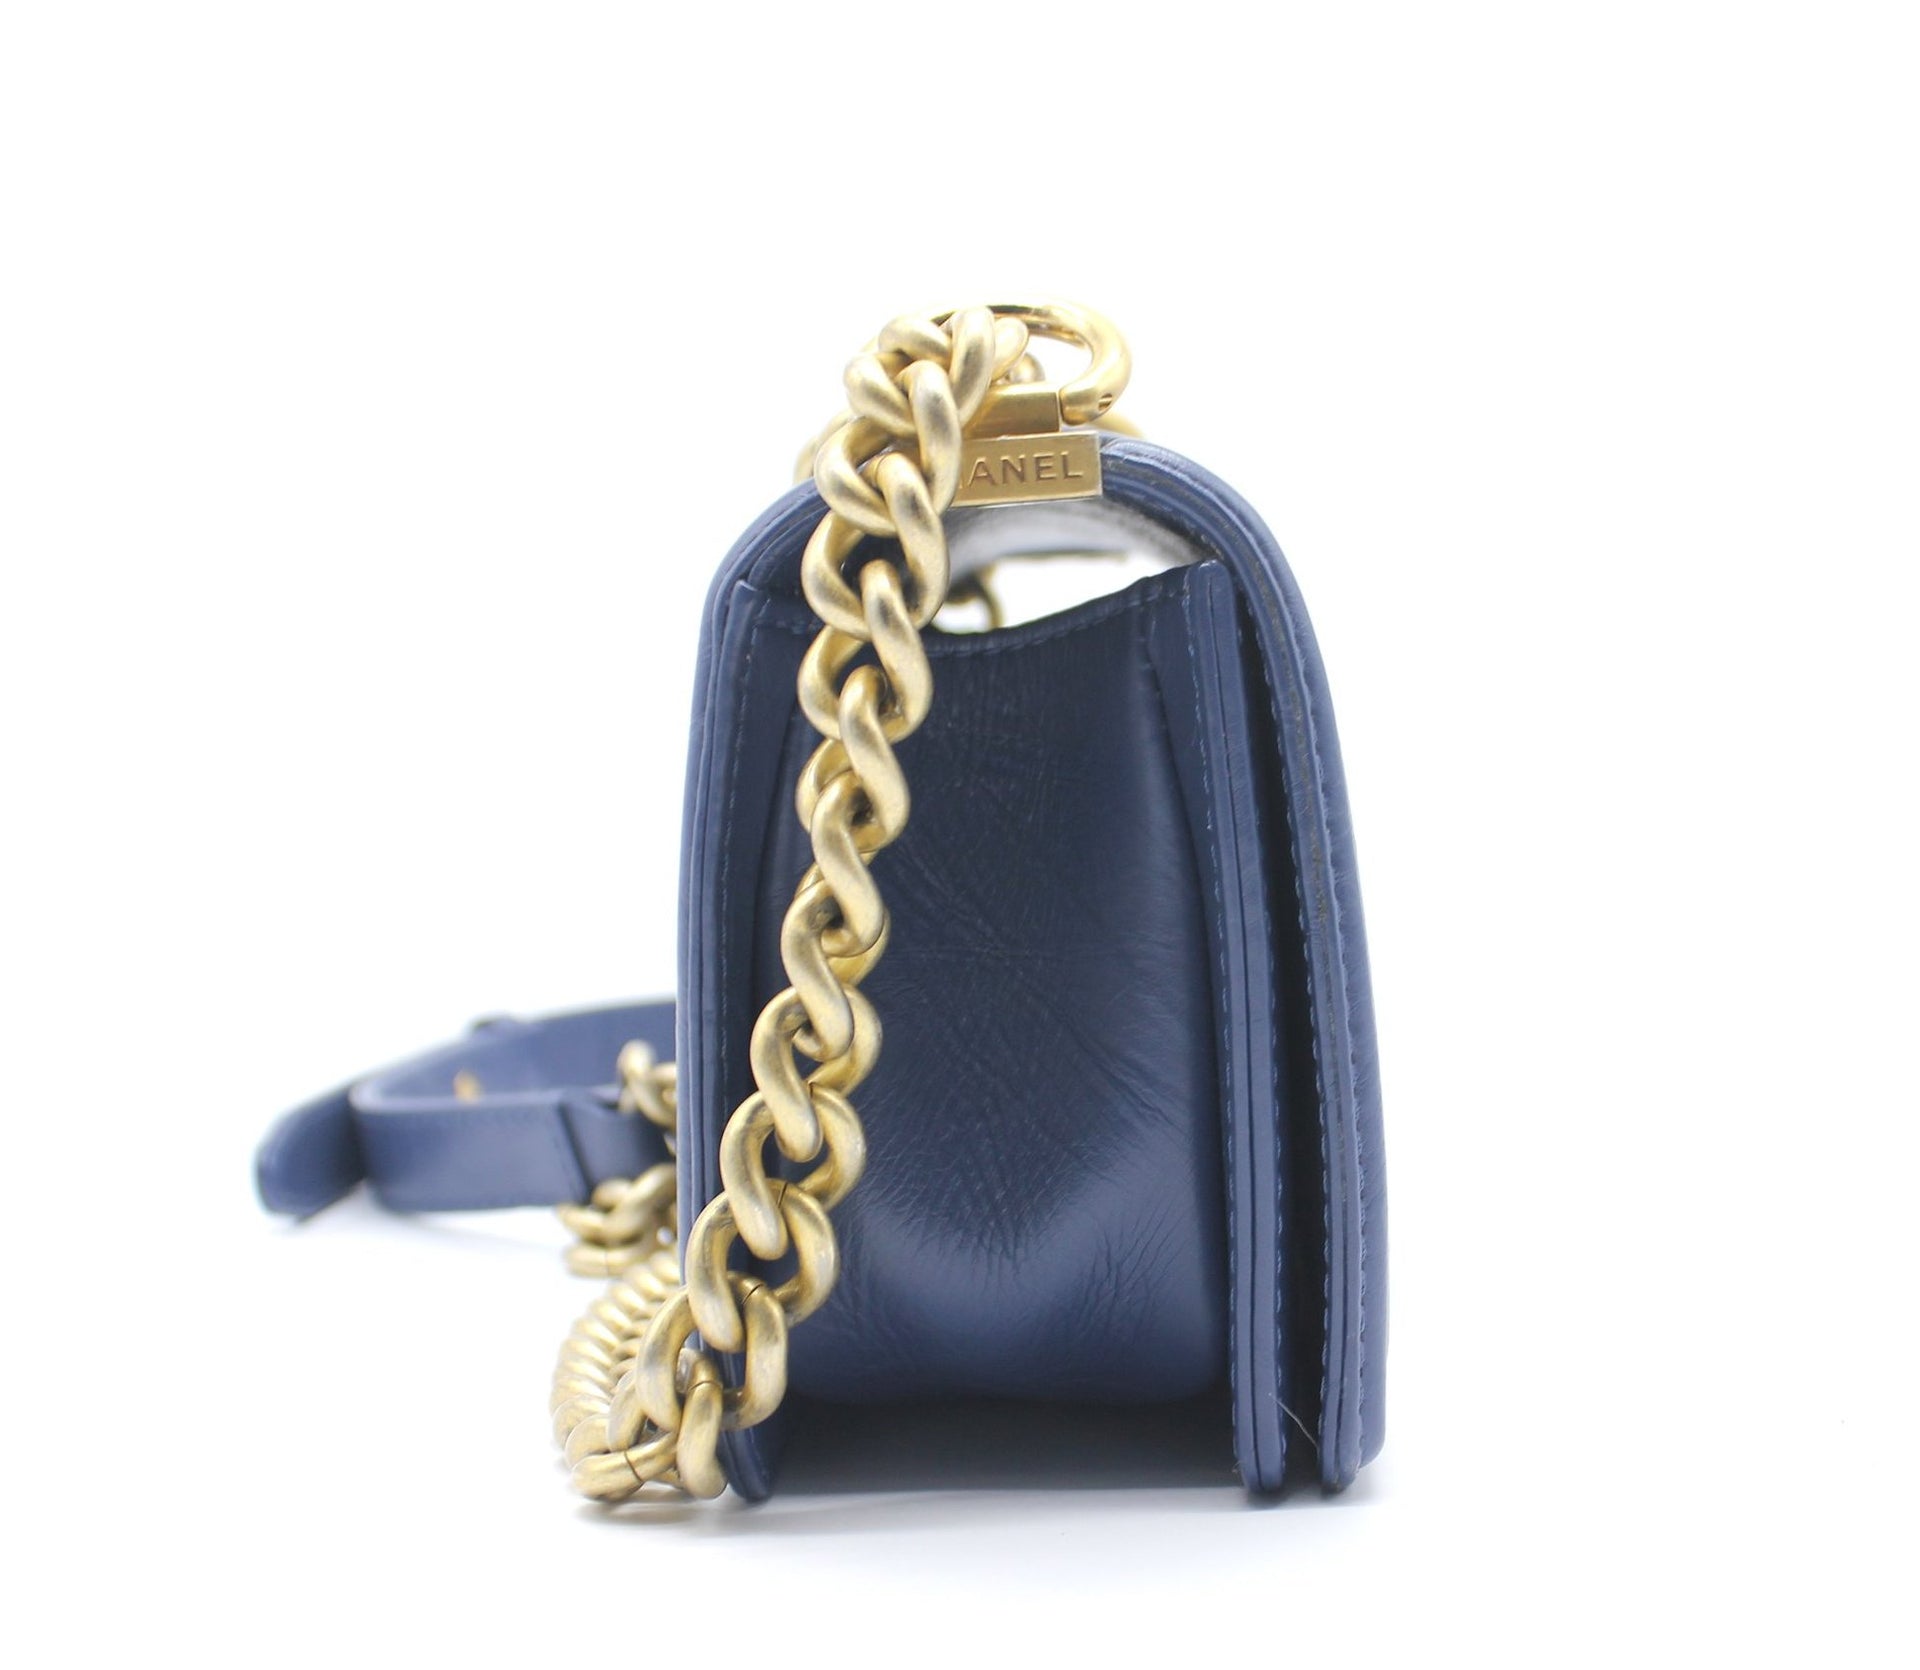 chanel blue tote handbag